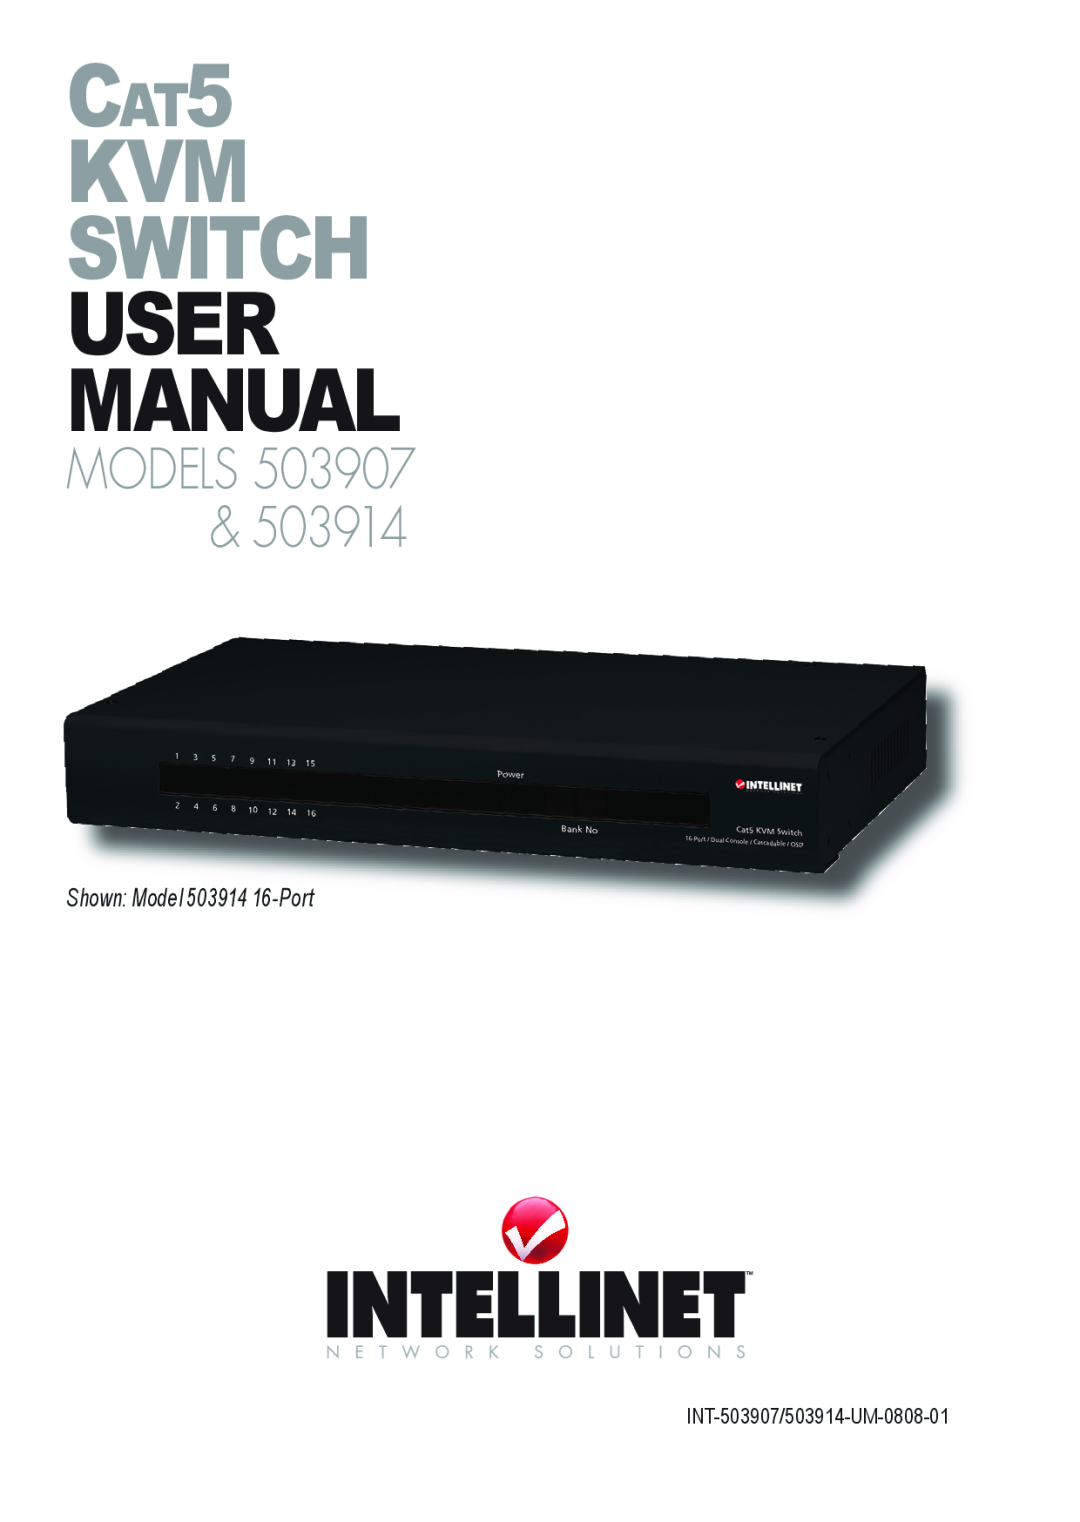 Intellinet Network Solutions user manual Models 503907, Shown Model 503914 16-Port, INT-503907/503914-UM-0808-01 